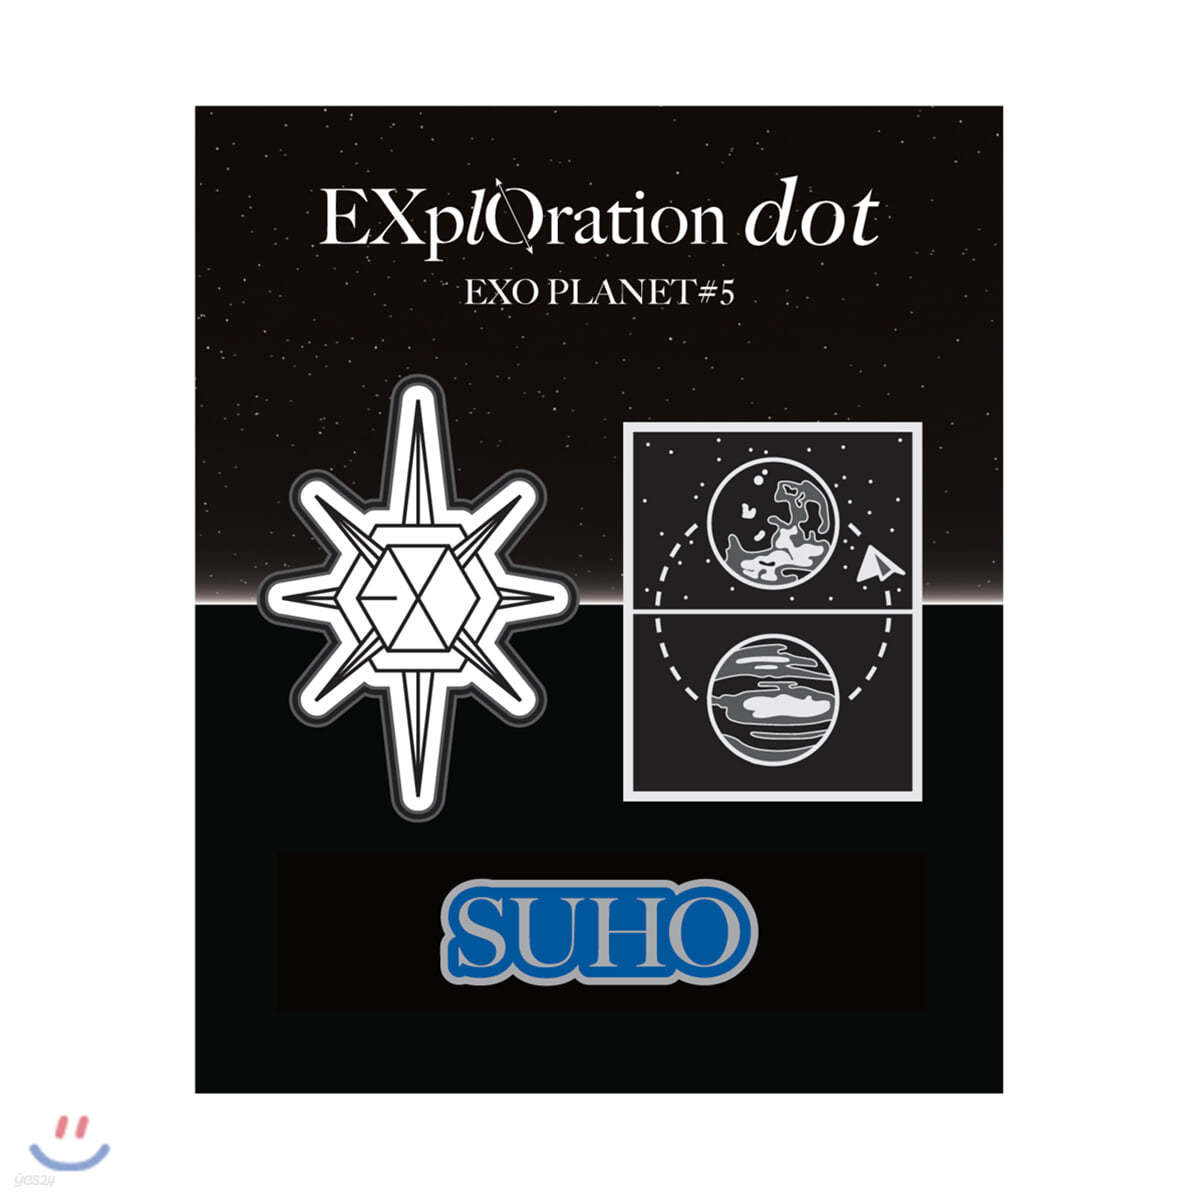 EXO PLANET #5 - EXplOration - dot 와펜스티커SET [수호 ver.]